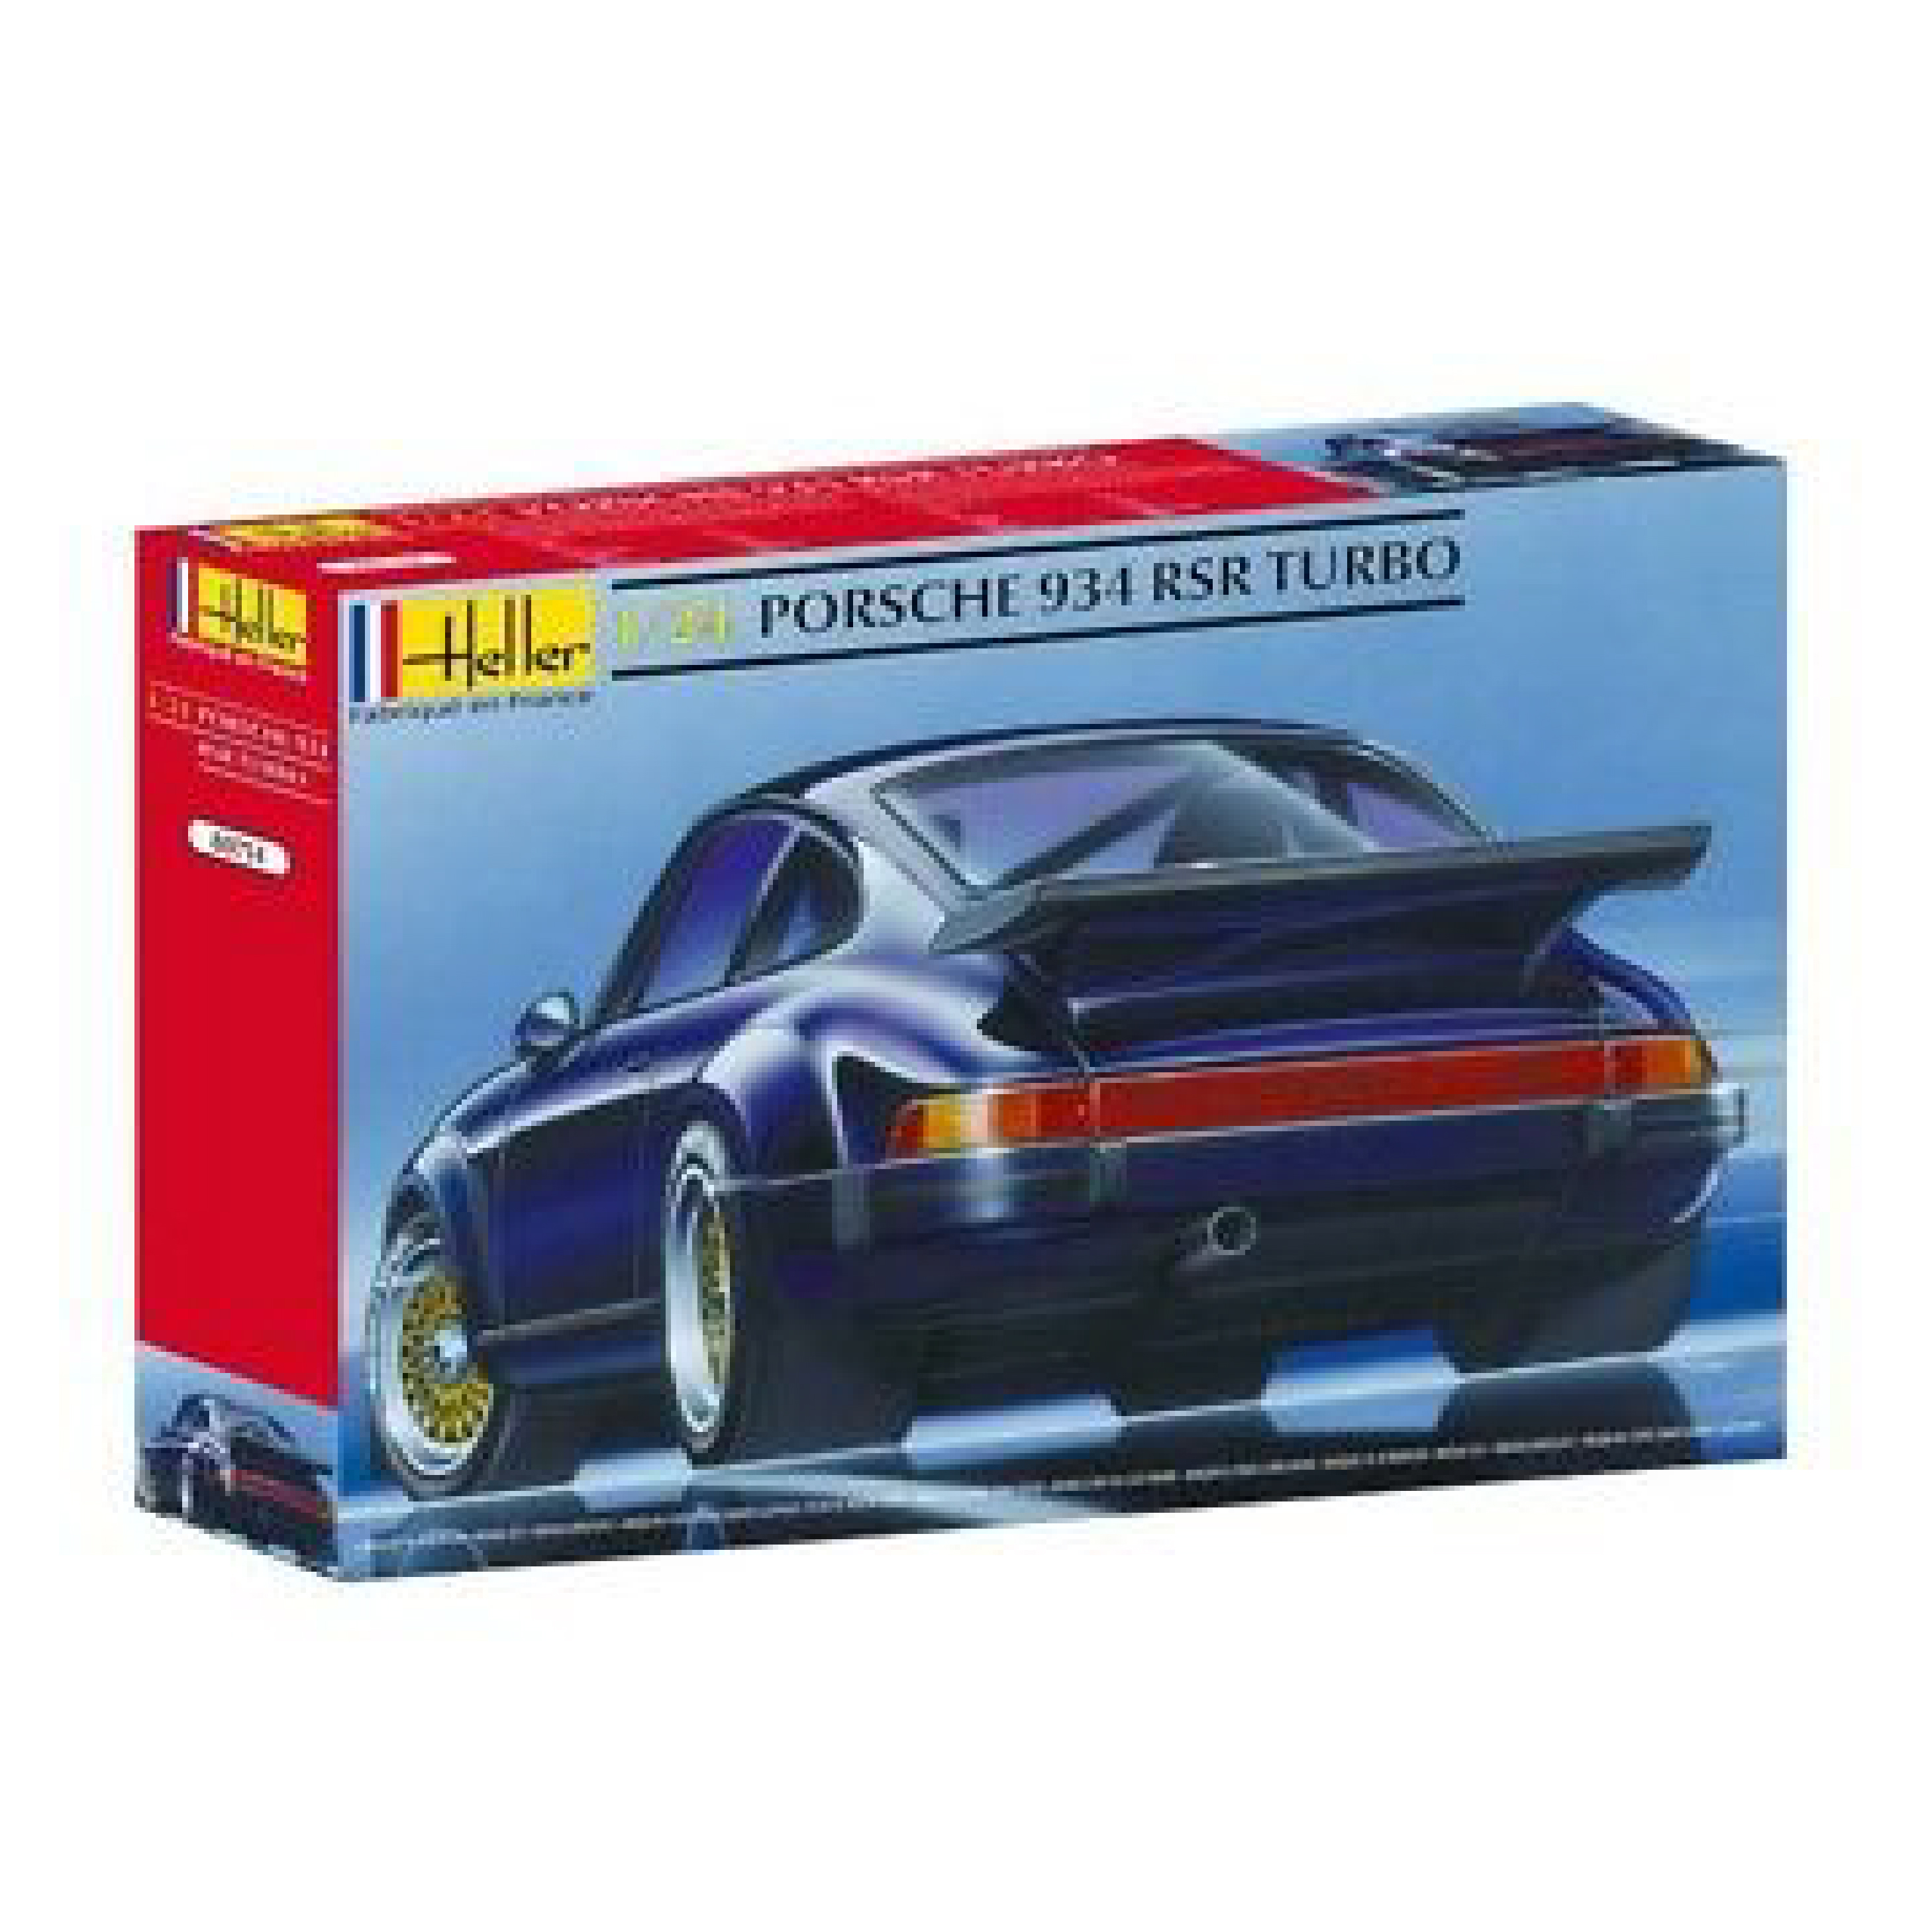 Heller 1/24 Maket Porsche 934 RSR Turbo